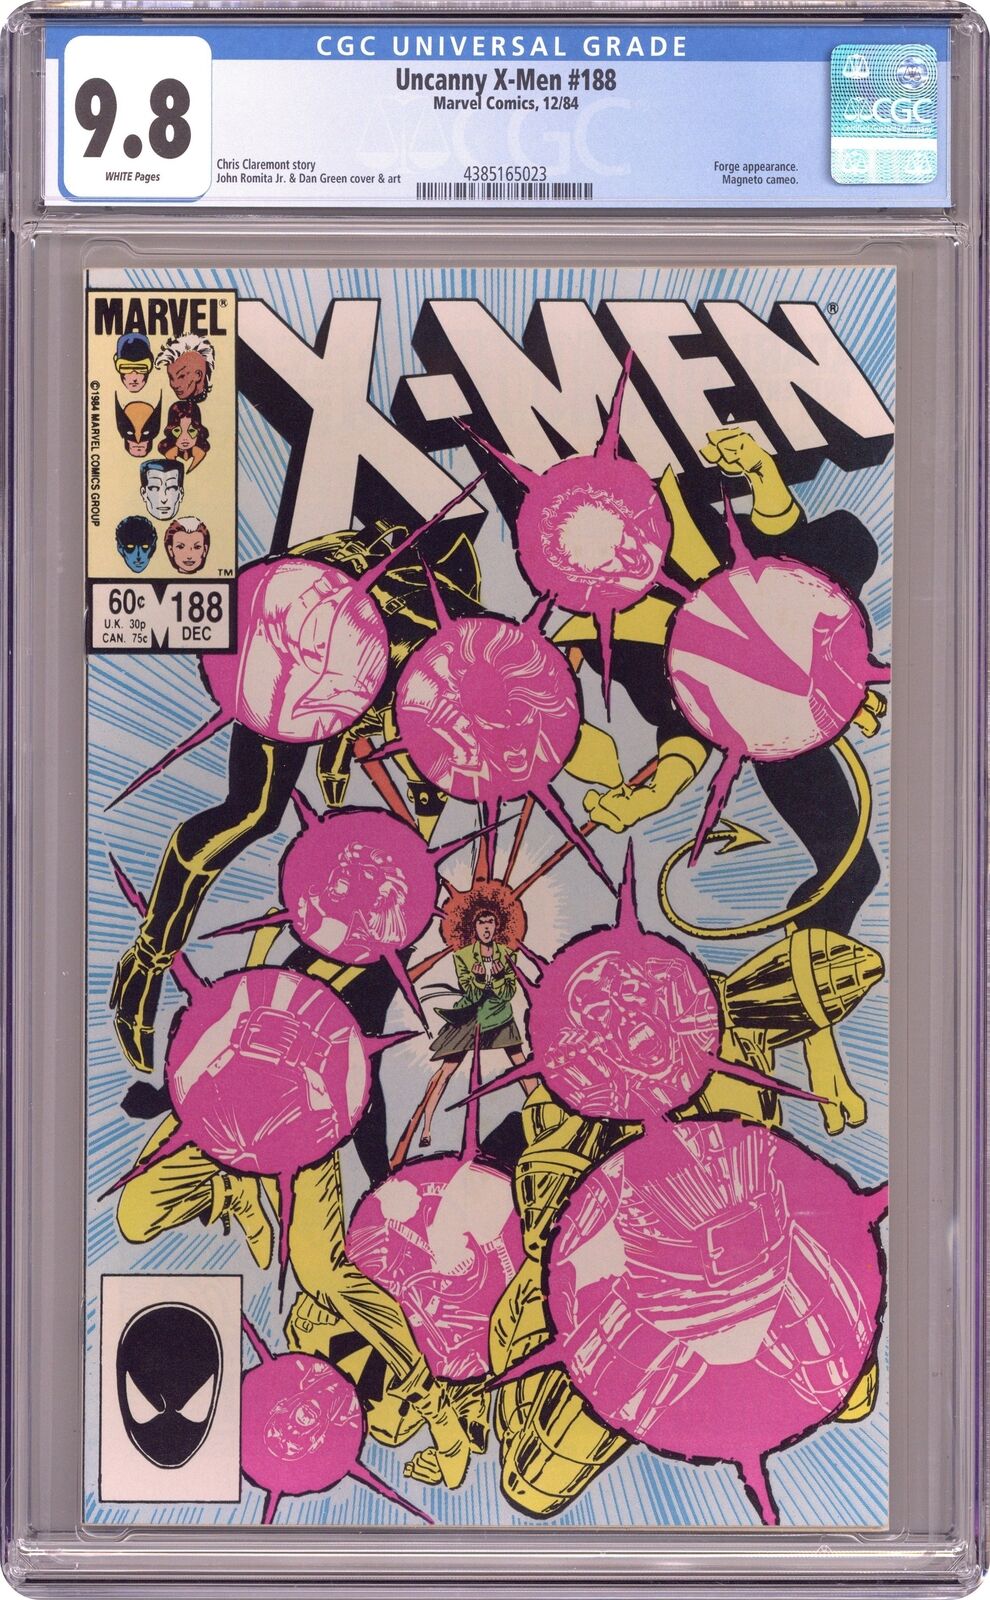 Uncanny X-Men #188D CGC 9.8 1984 4385165023